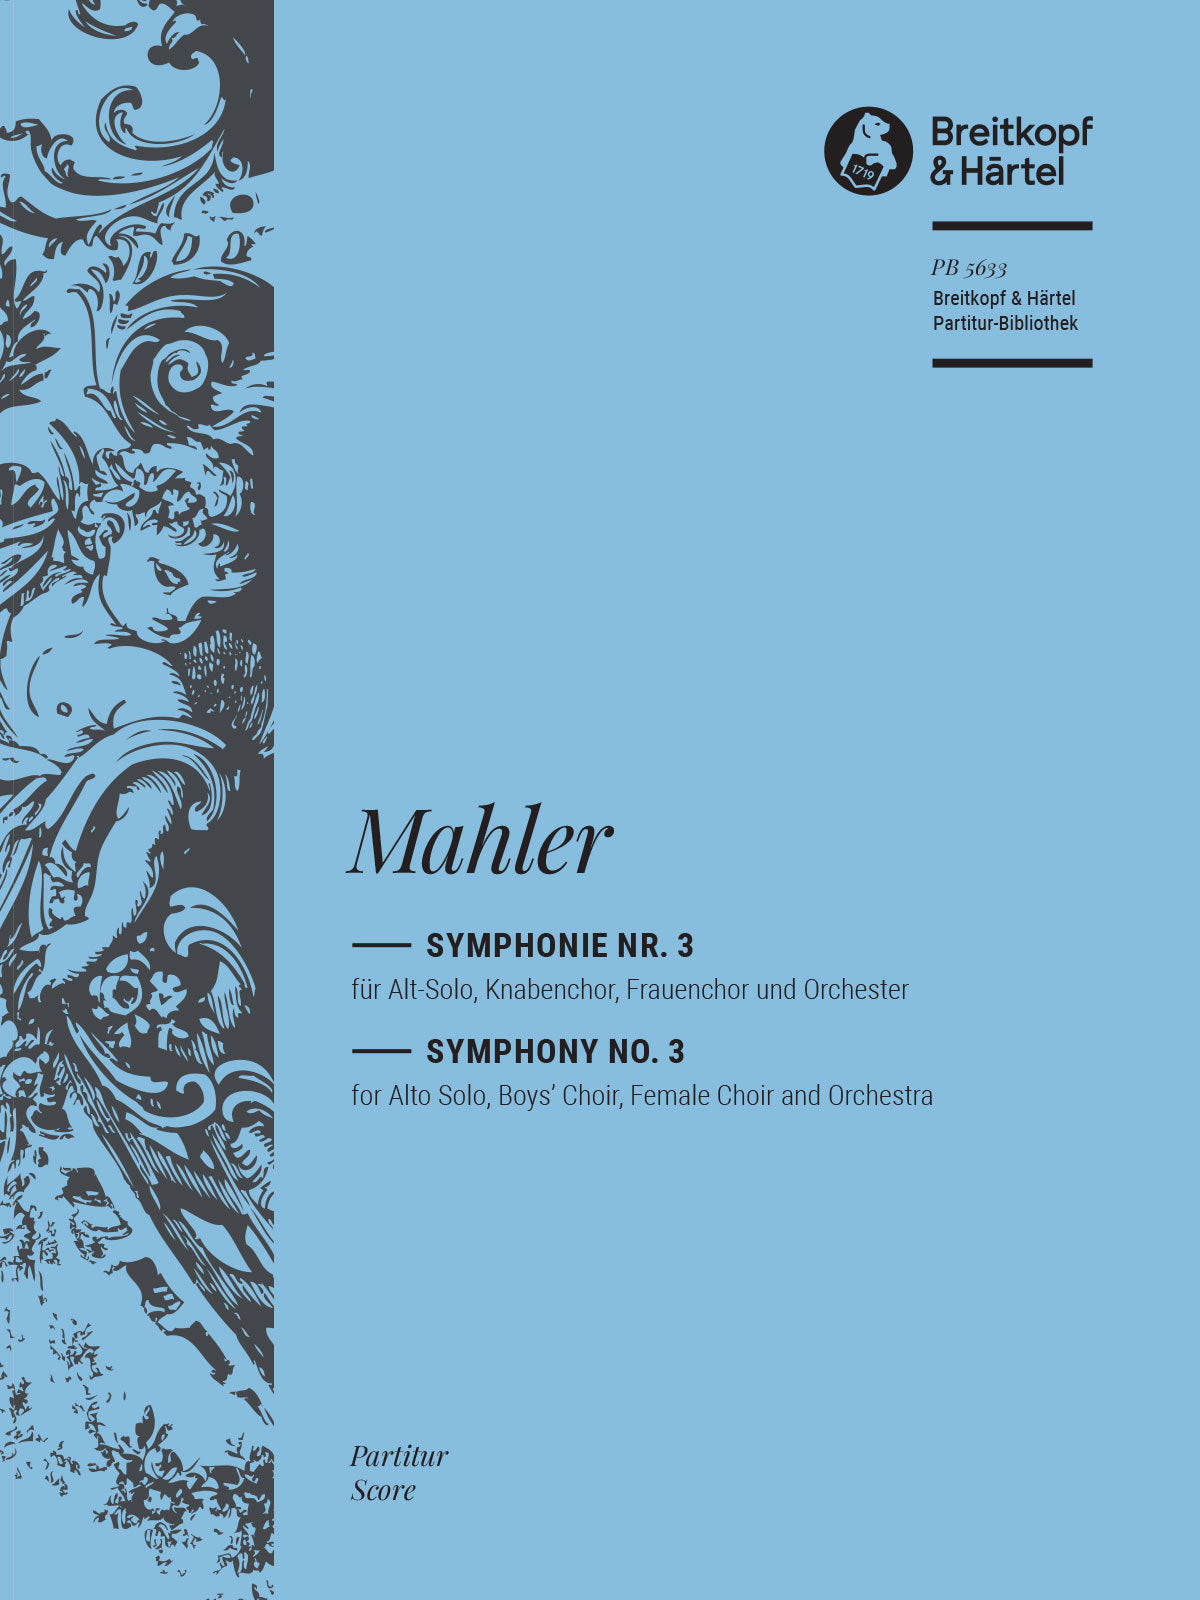 Mahler Symphony No 3 piano vocal score Movements IV and V